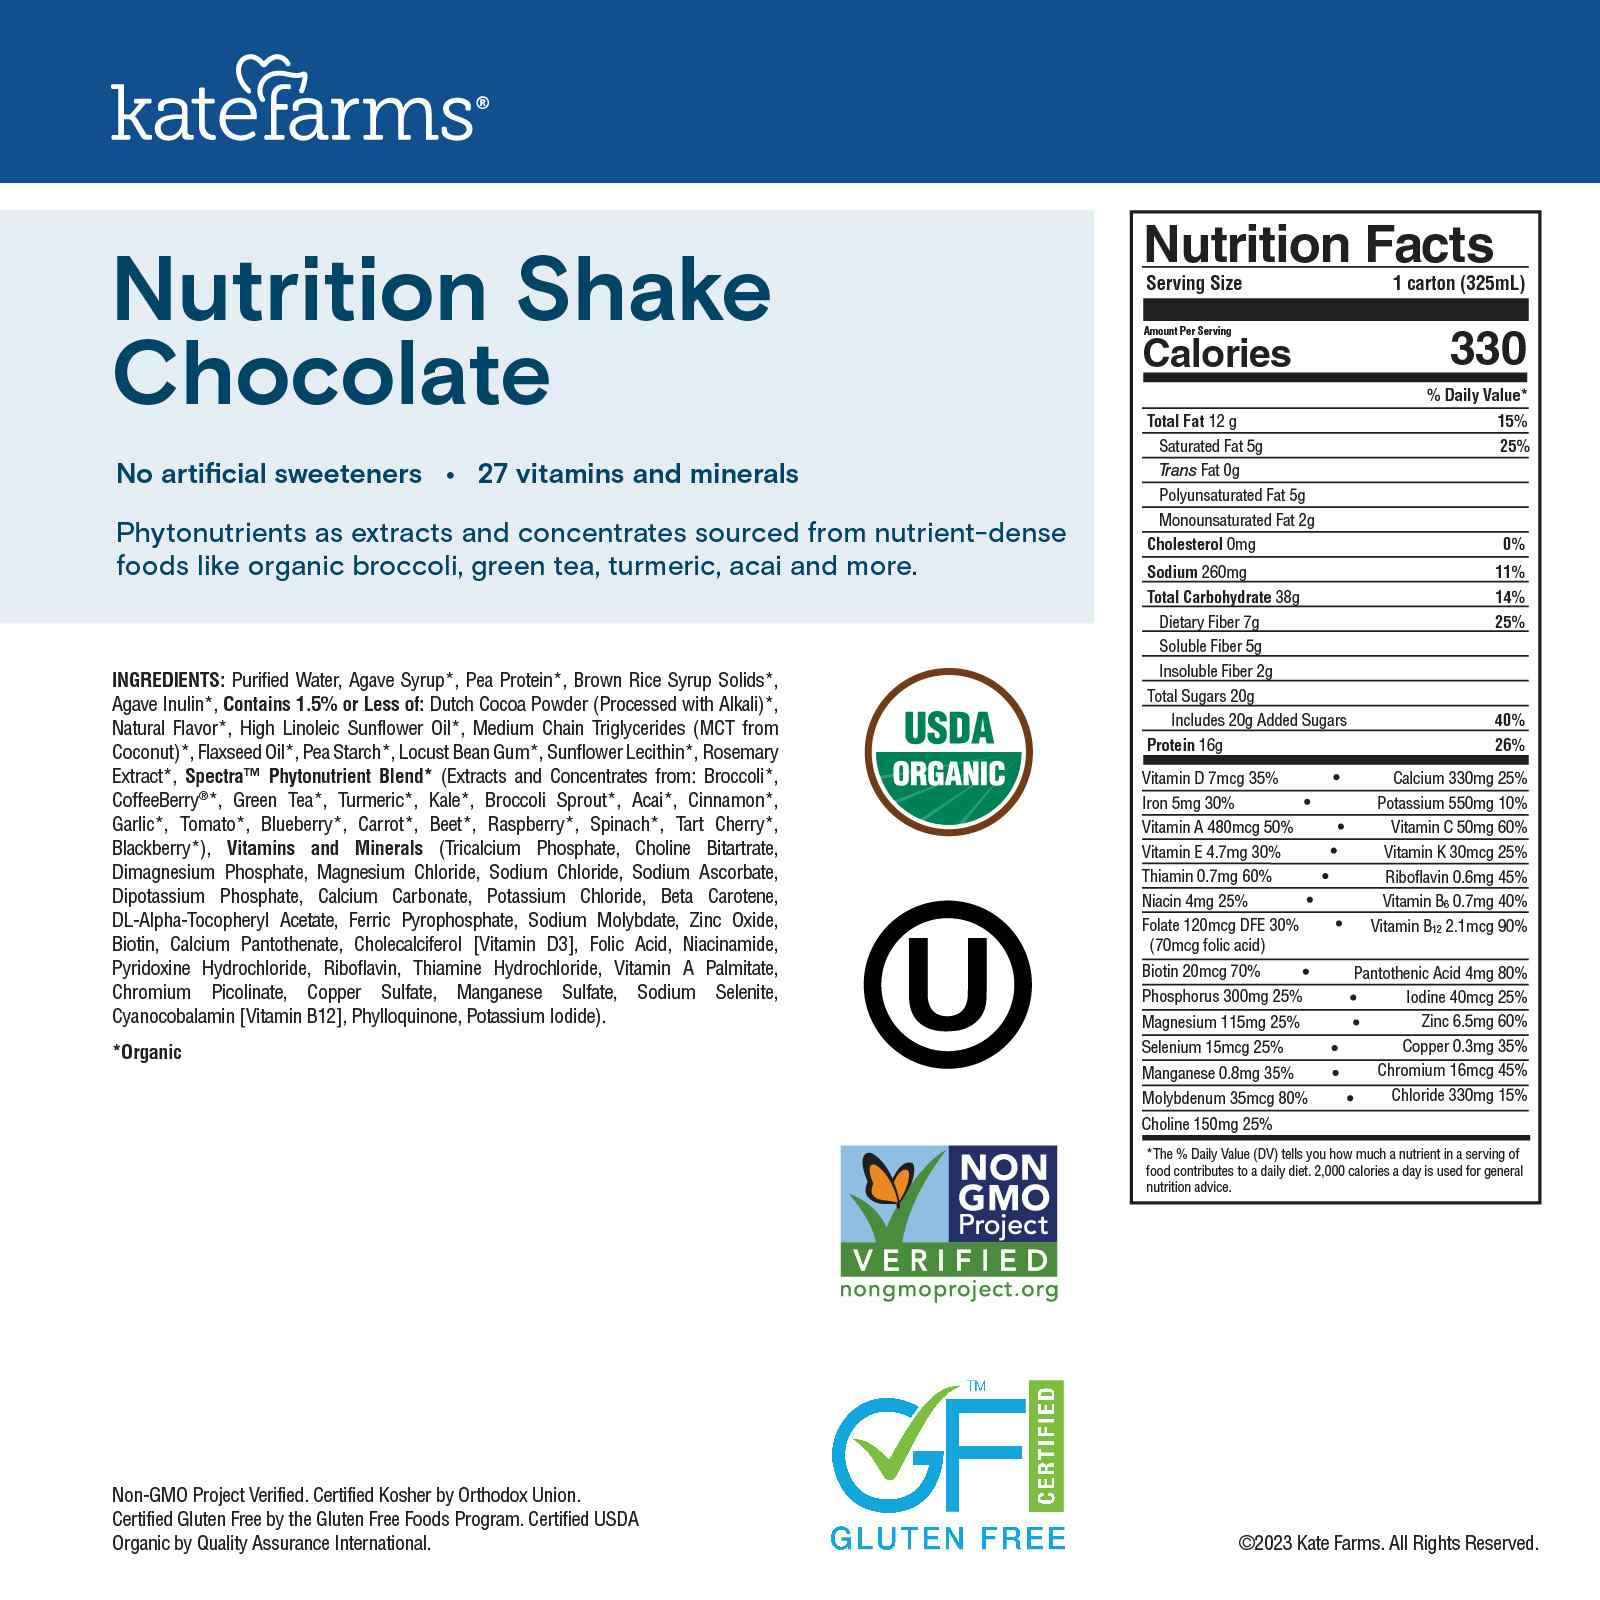 Kate Farms Nutrition Shake, Chocolate, 11 oz.